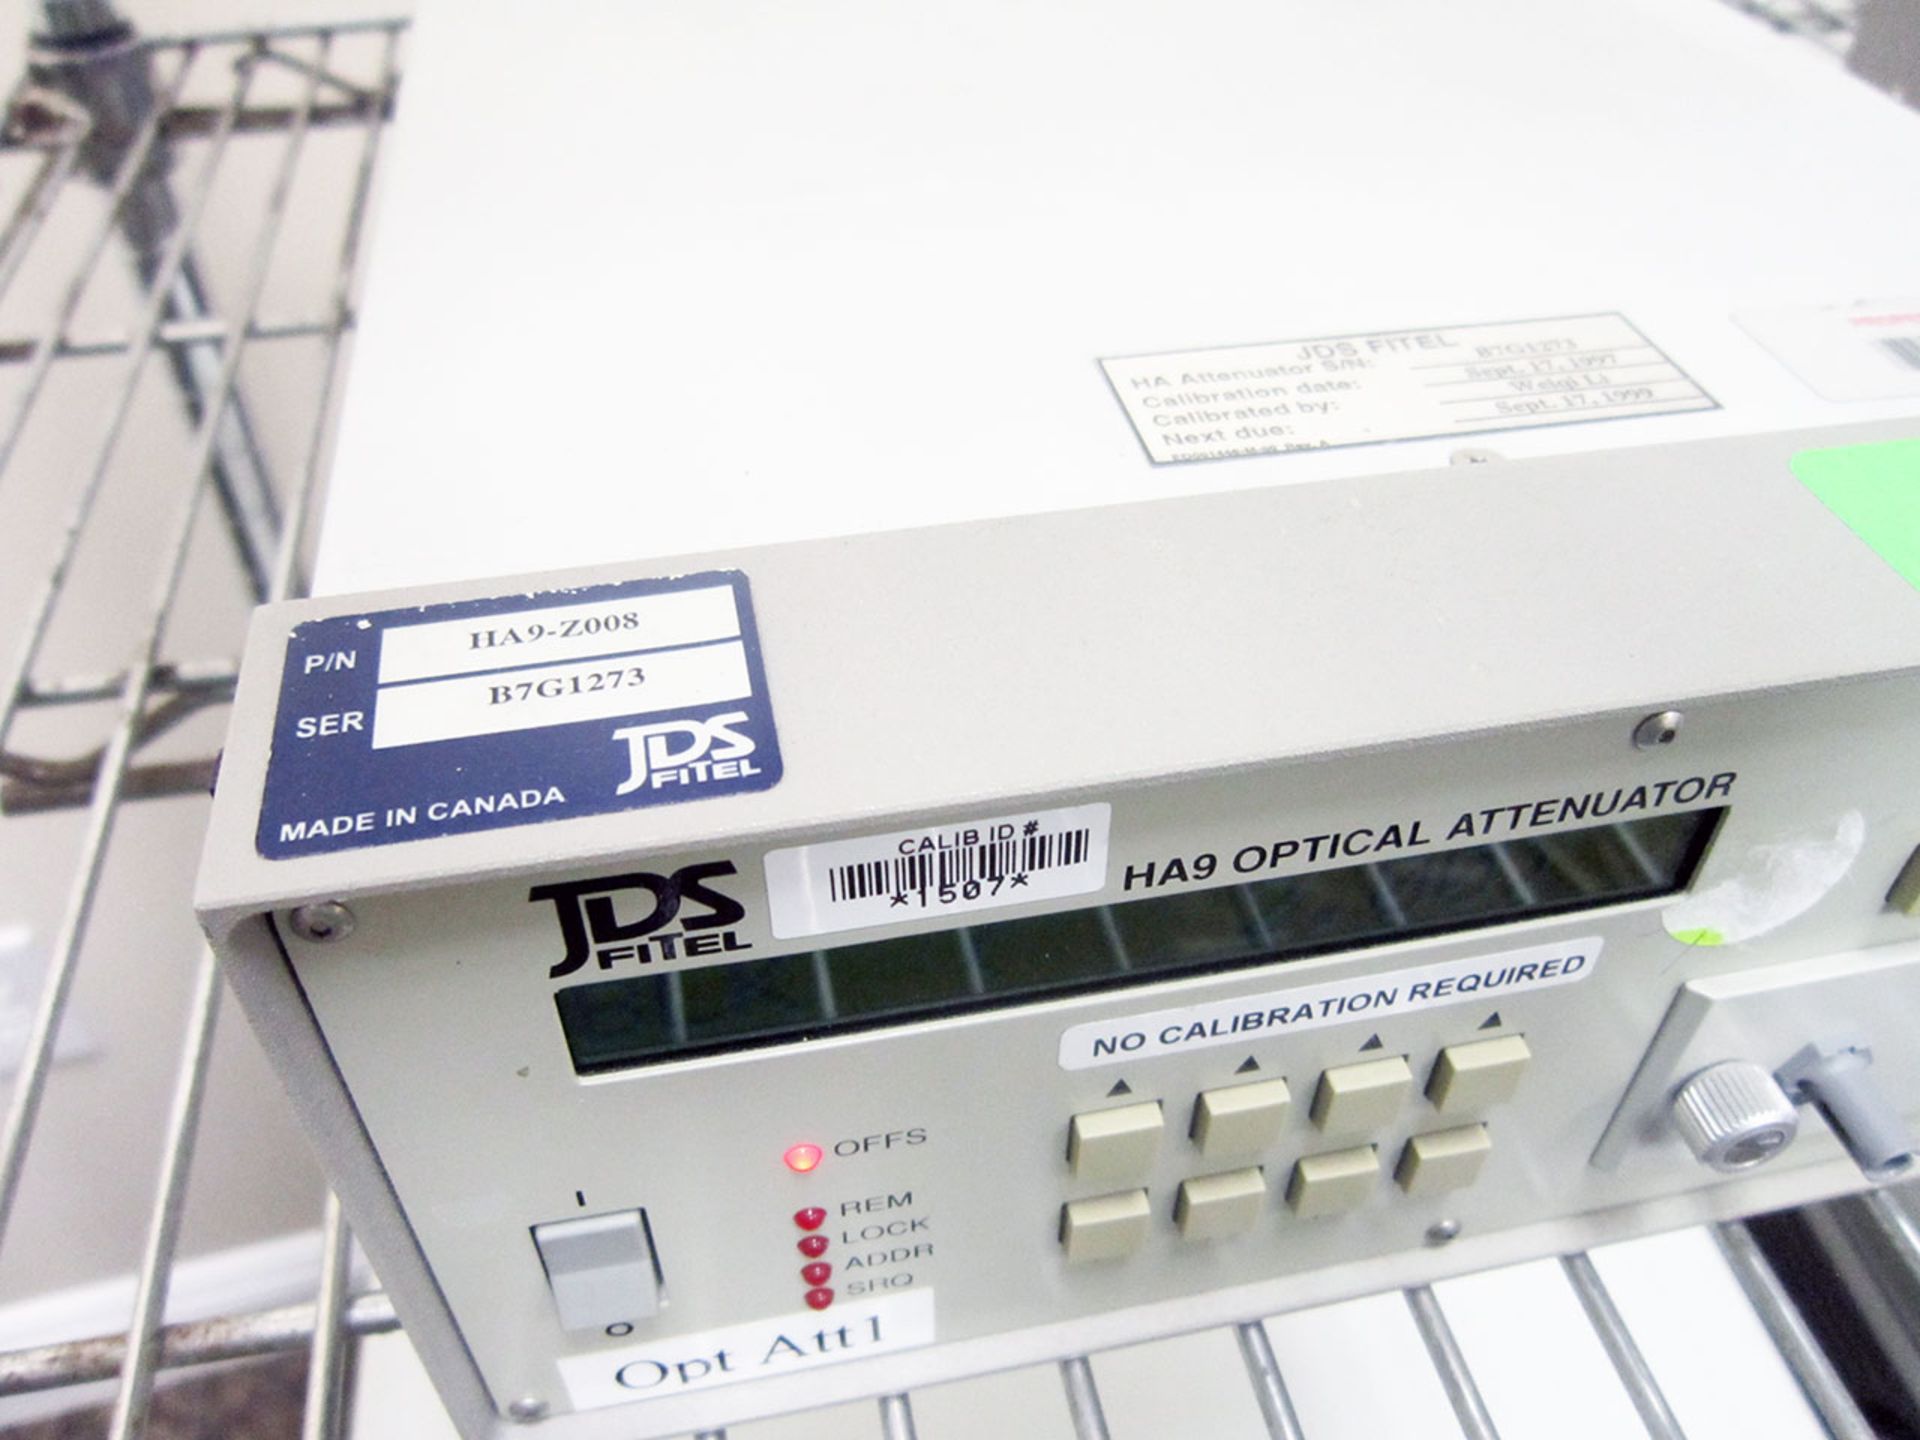 JDS Fitel HA9 Optical Attenuator HA9-Z008 - Image 2 of 4